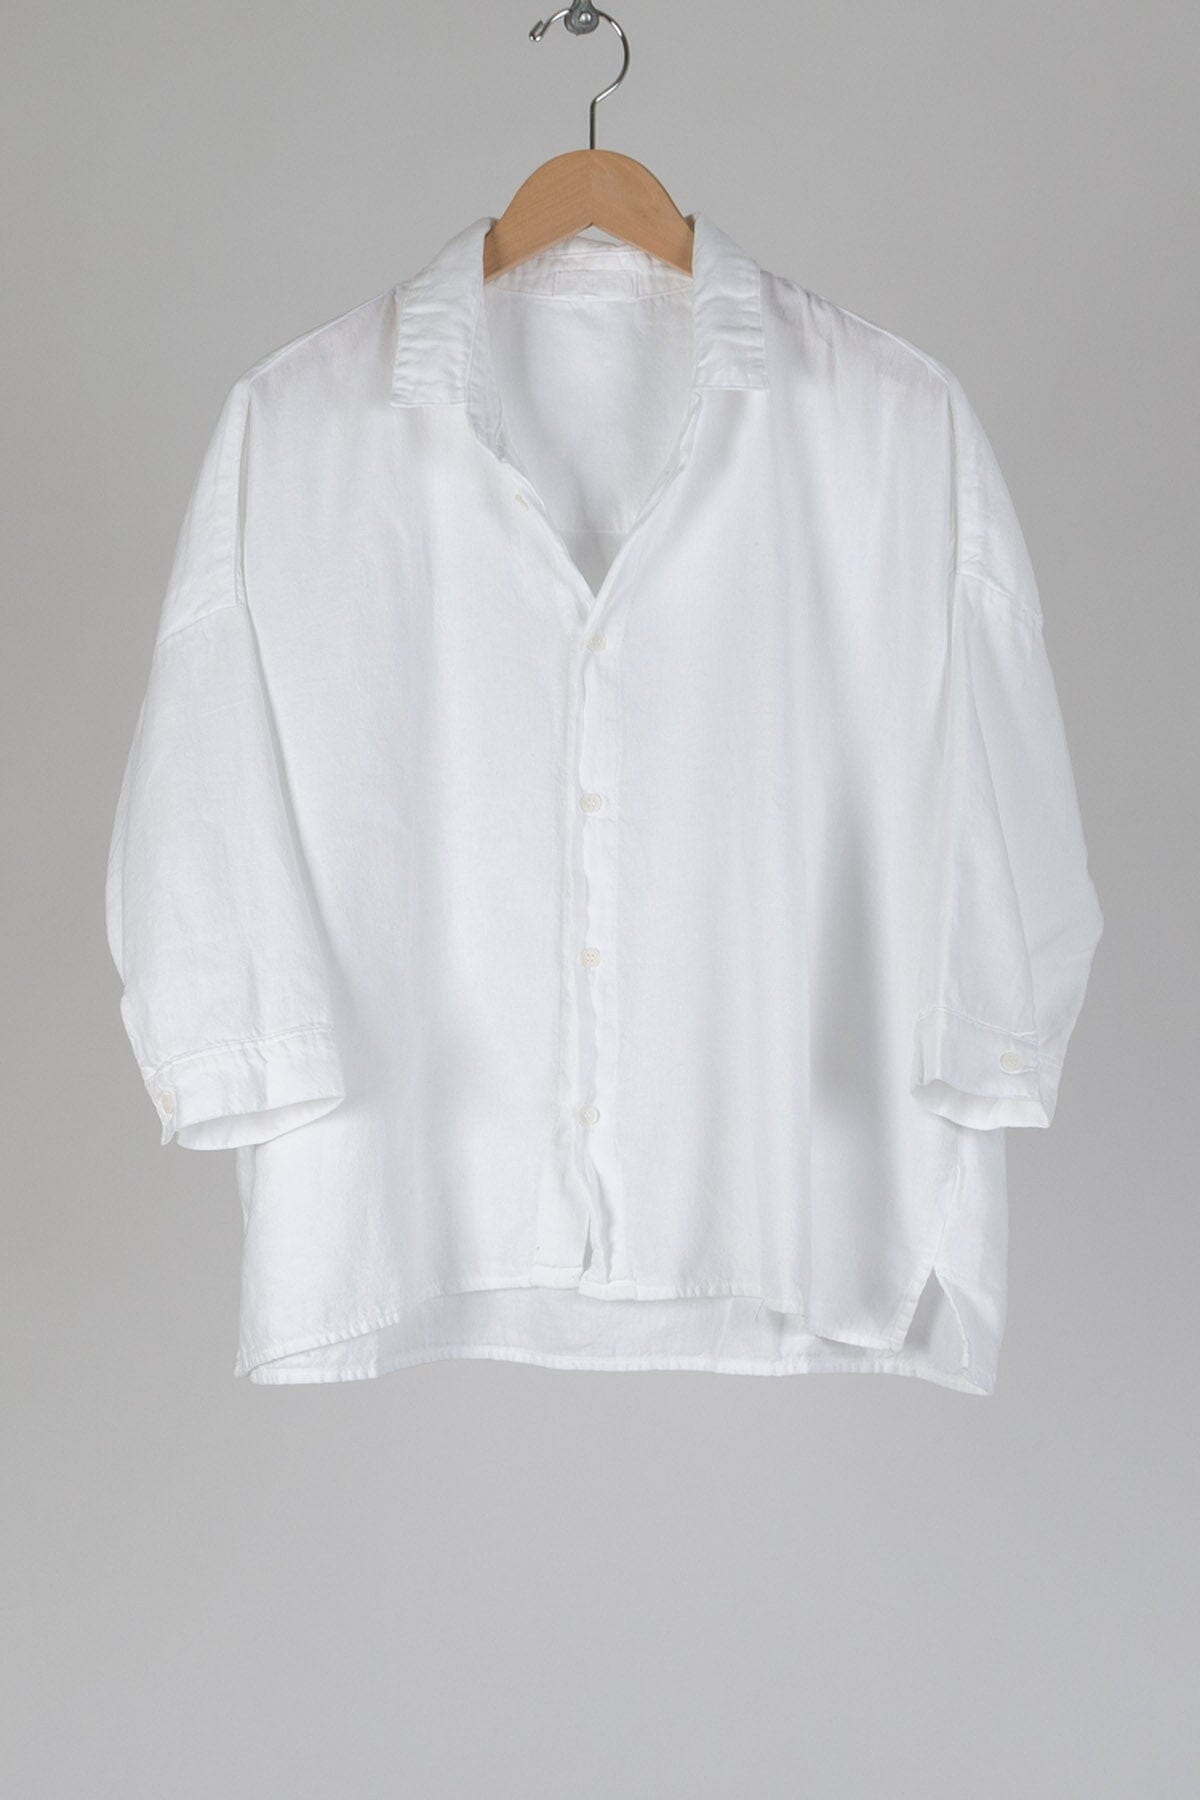 Rooney - Textured Cotton S90 - 4269 Sale CP Shades white 4269